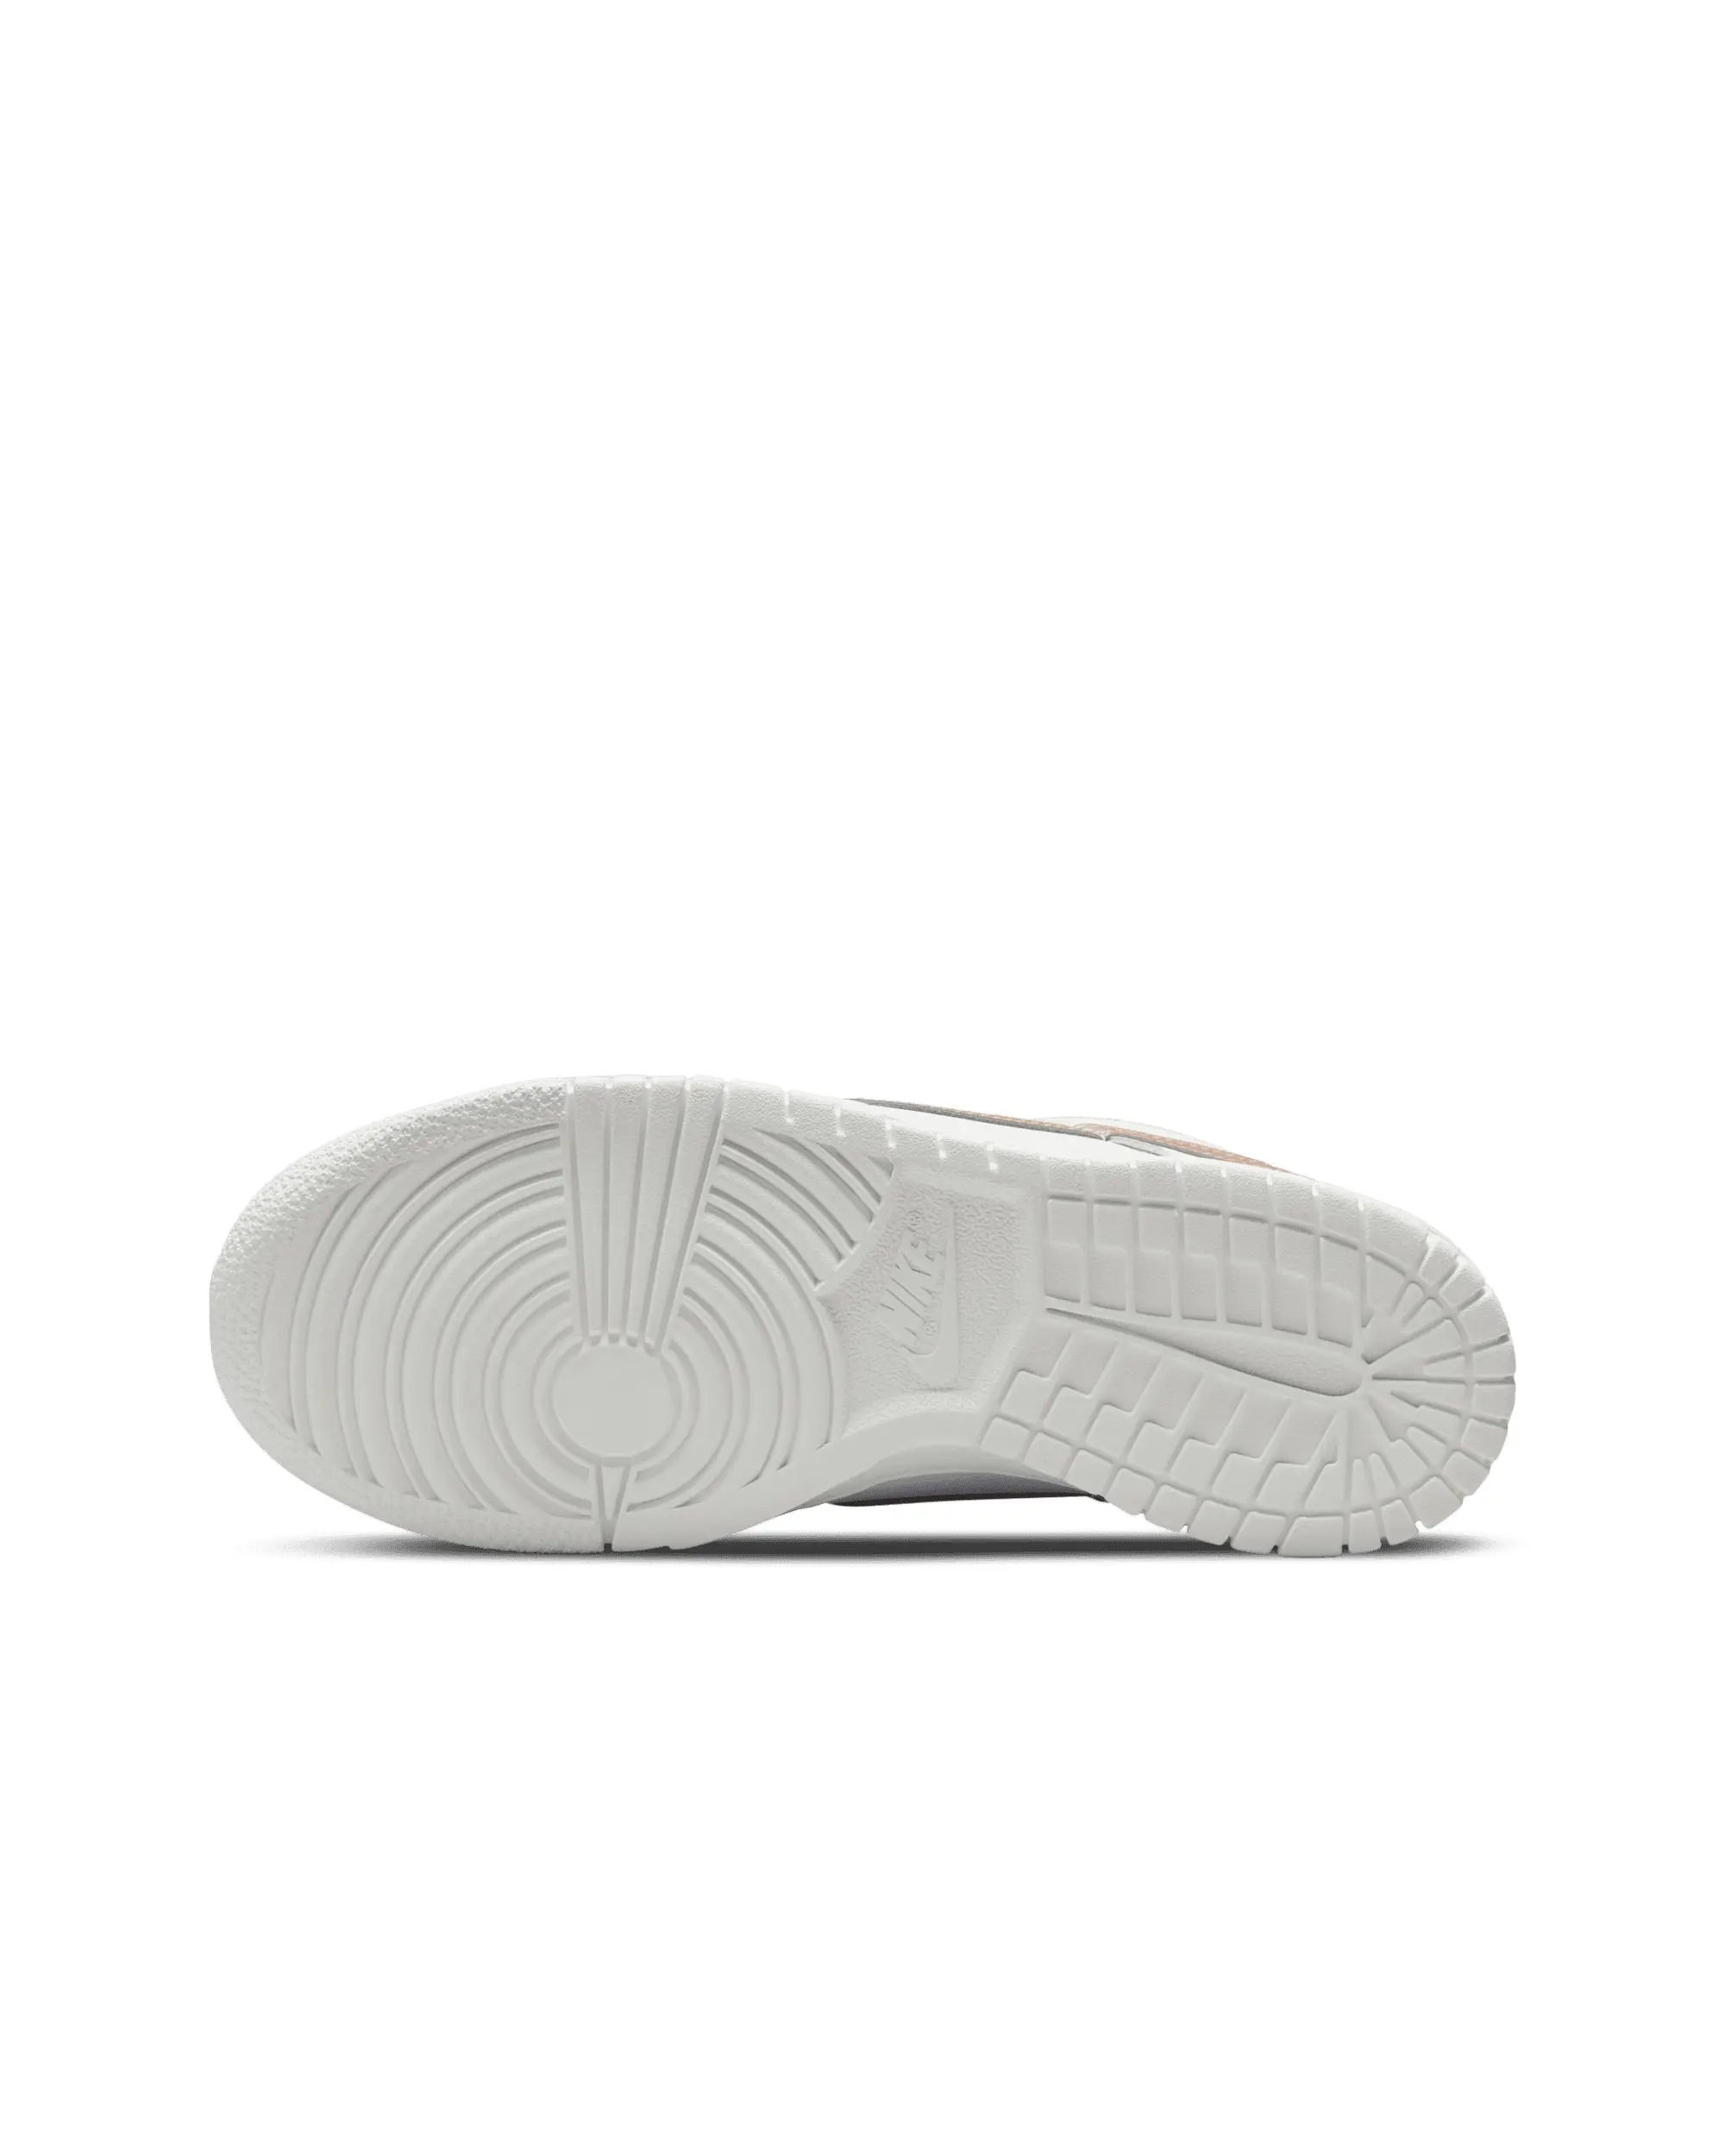 Nike Dunk Low Joy Togeth - White | DH9765-100 | FOOTY.COM